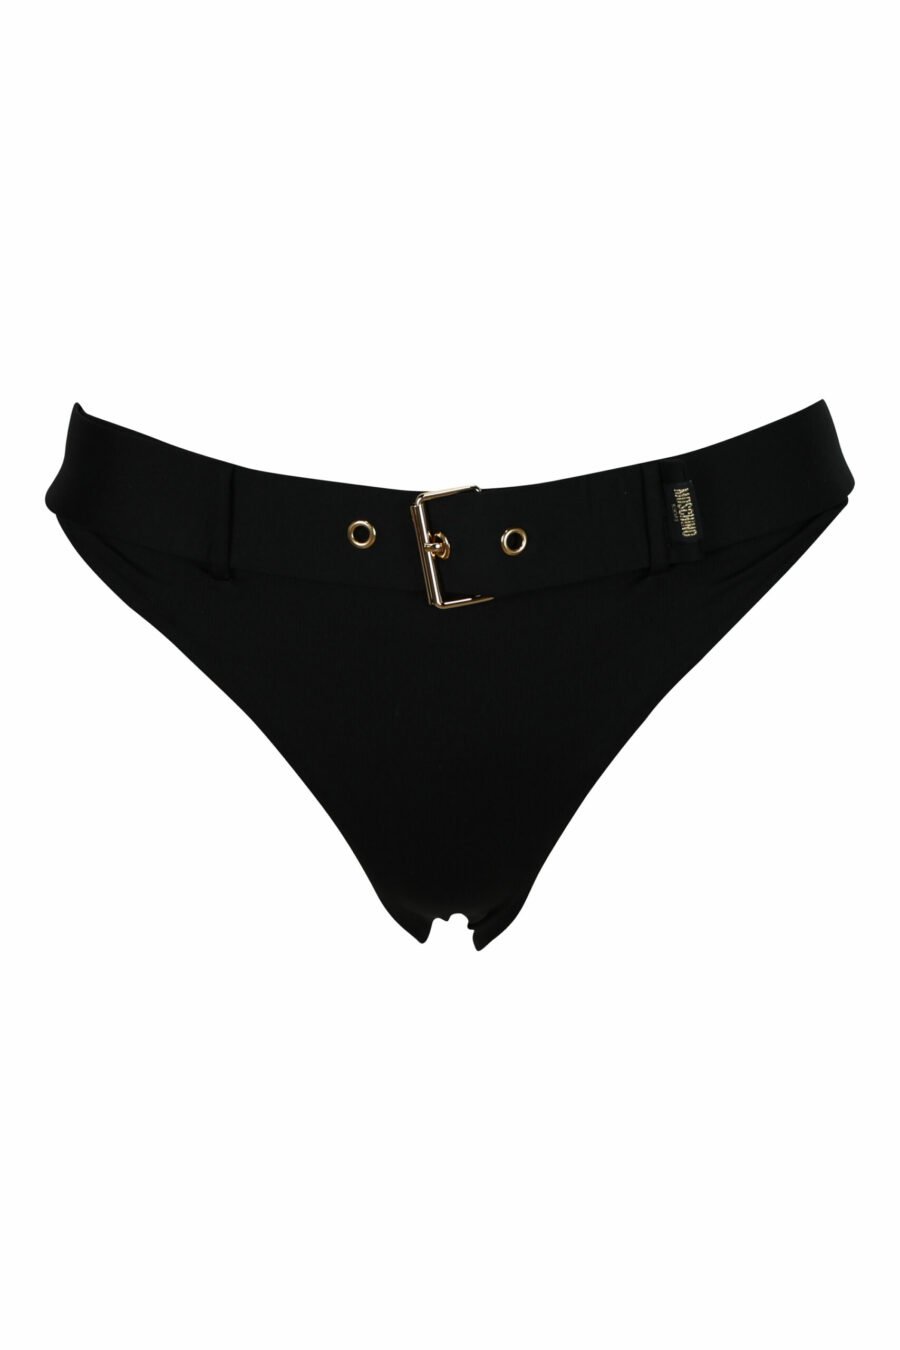 Bas de bikini noir avec boucle de ceinture - 667113654980